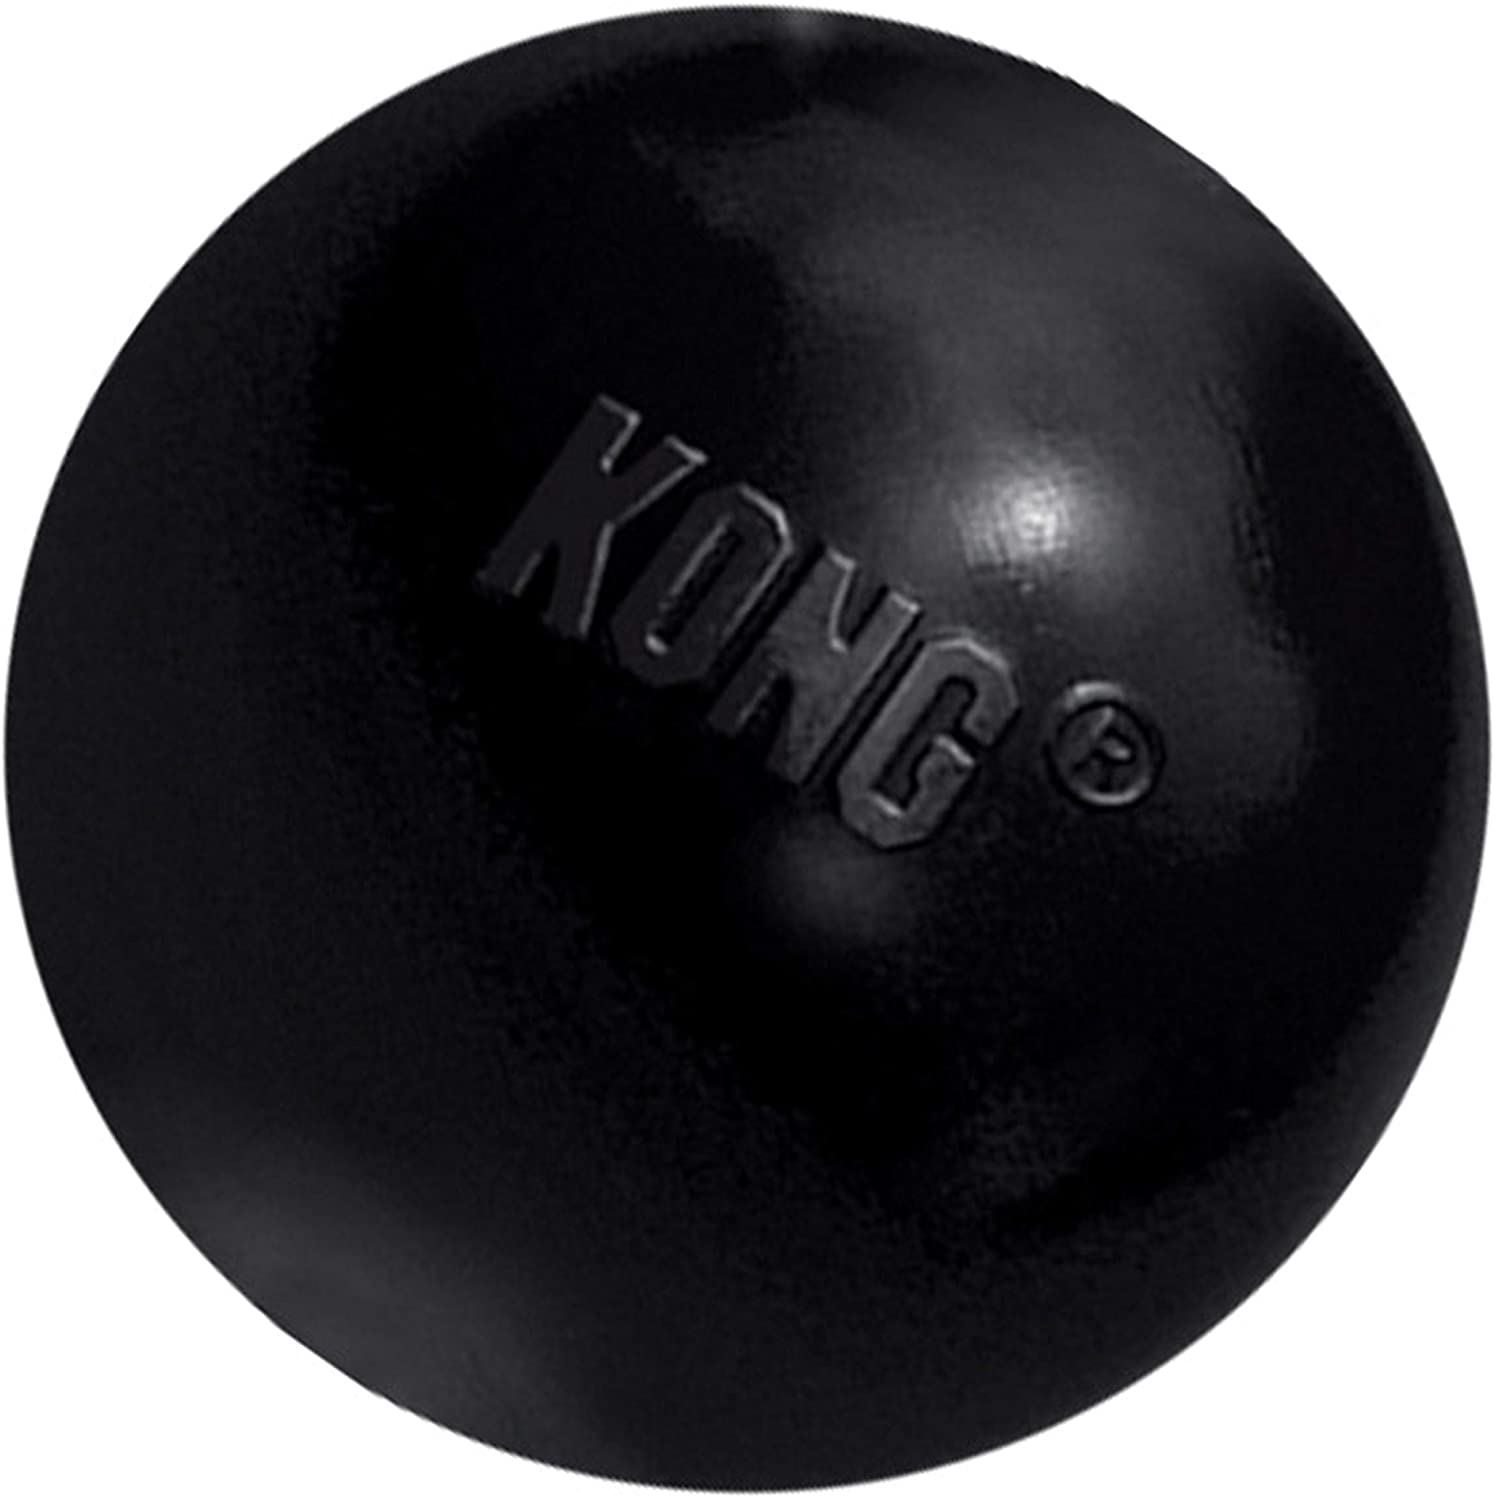  KONG - Extreme Ball - Juguete de caucho para mandíbulas potentes, negro - Raza mediana/grande 